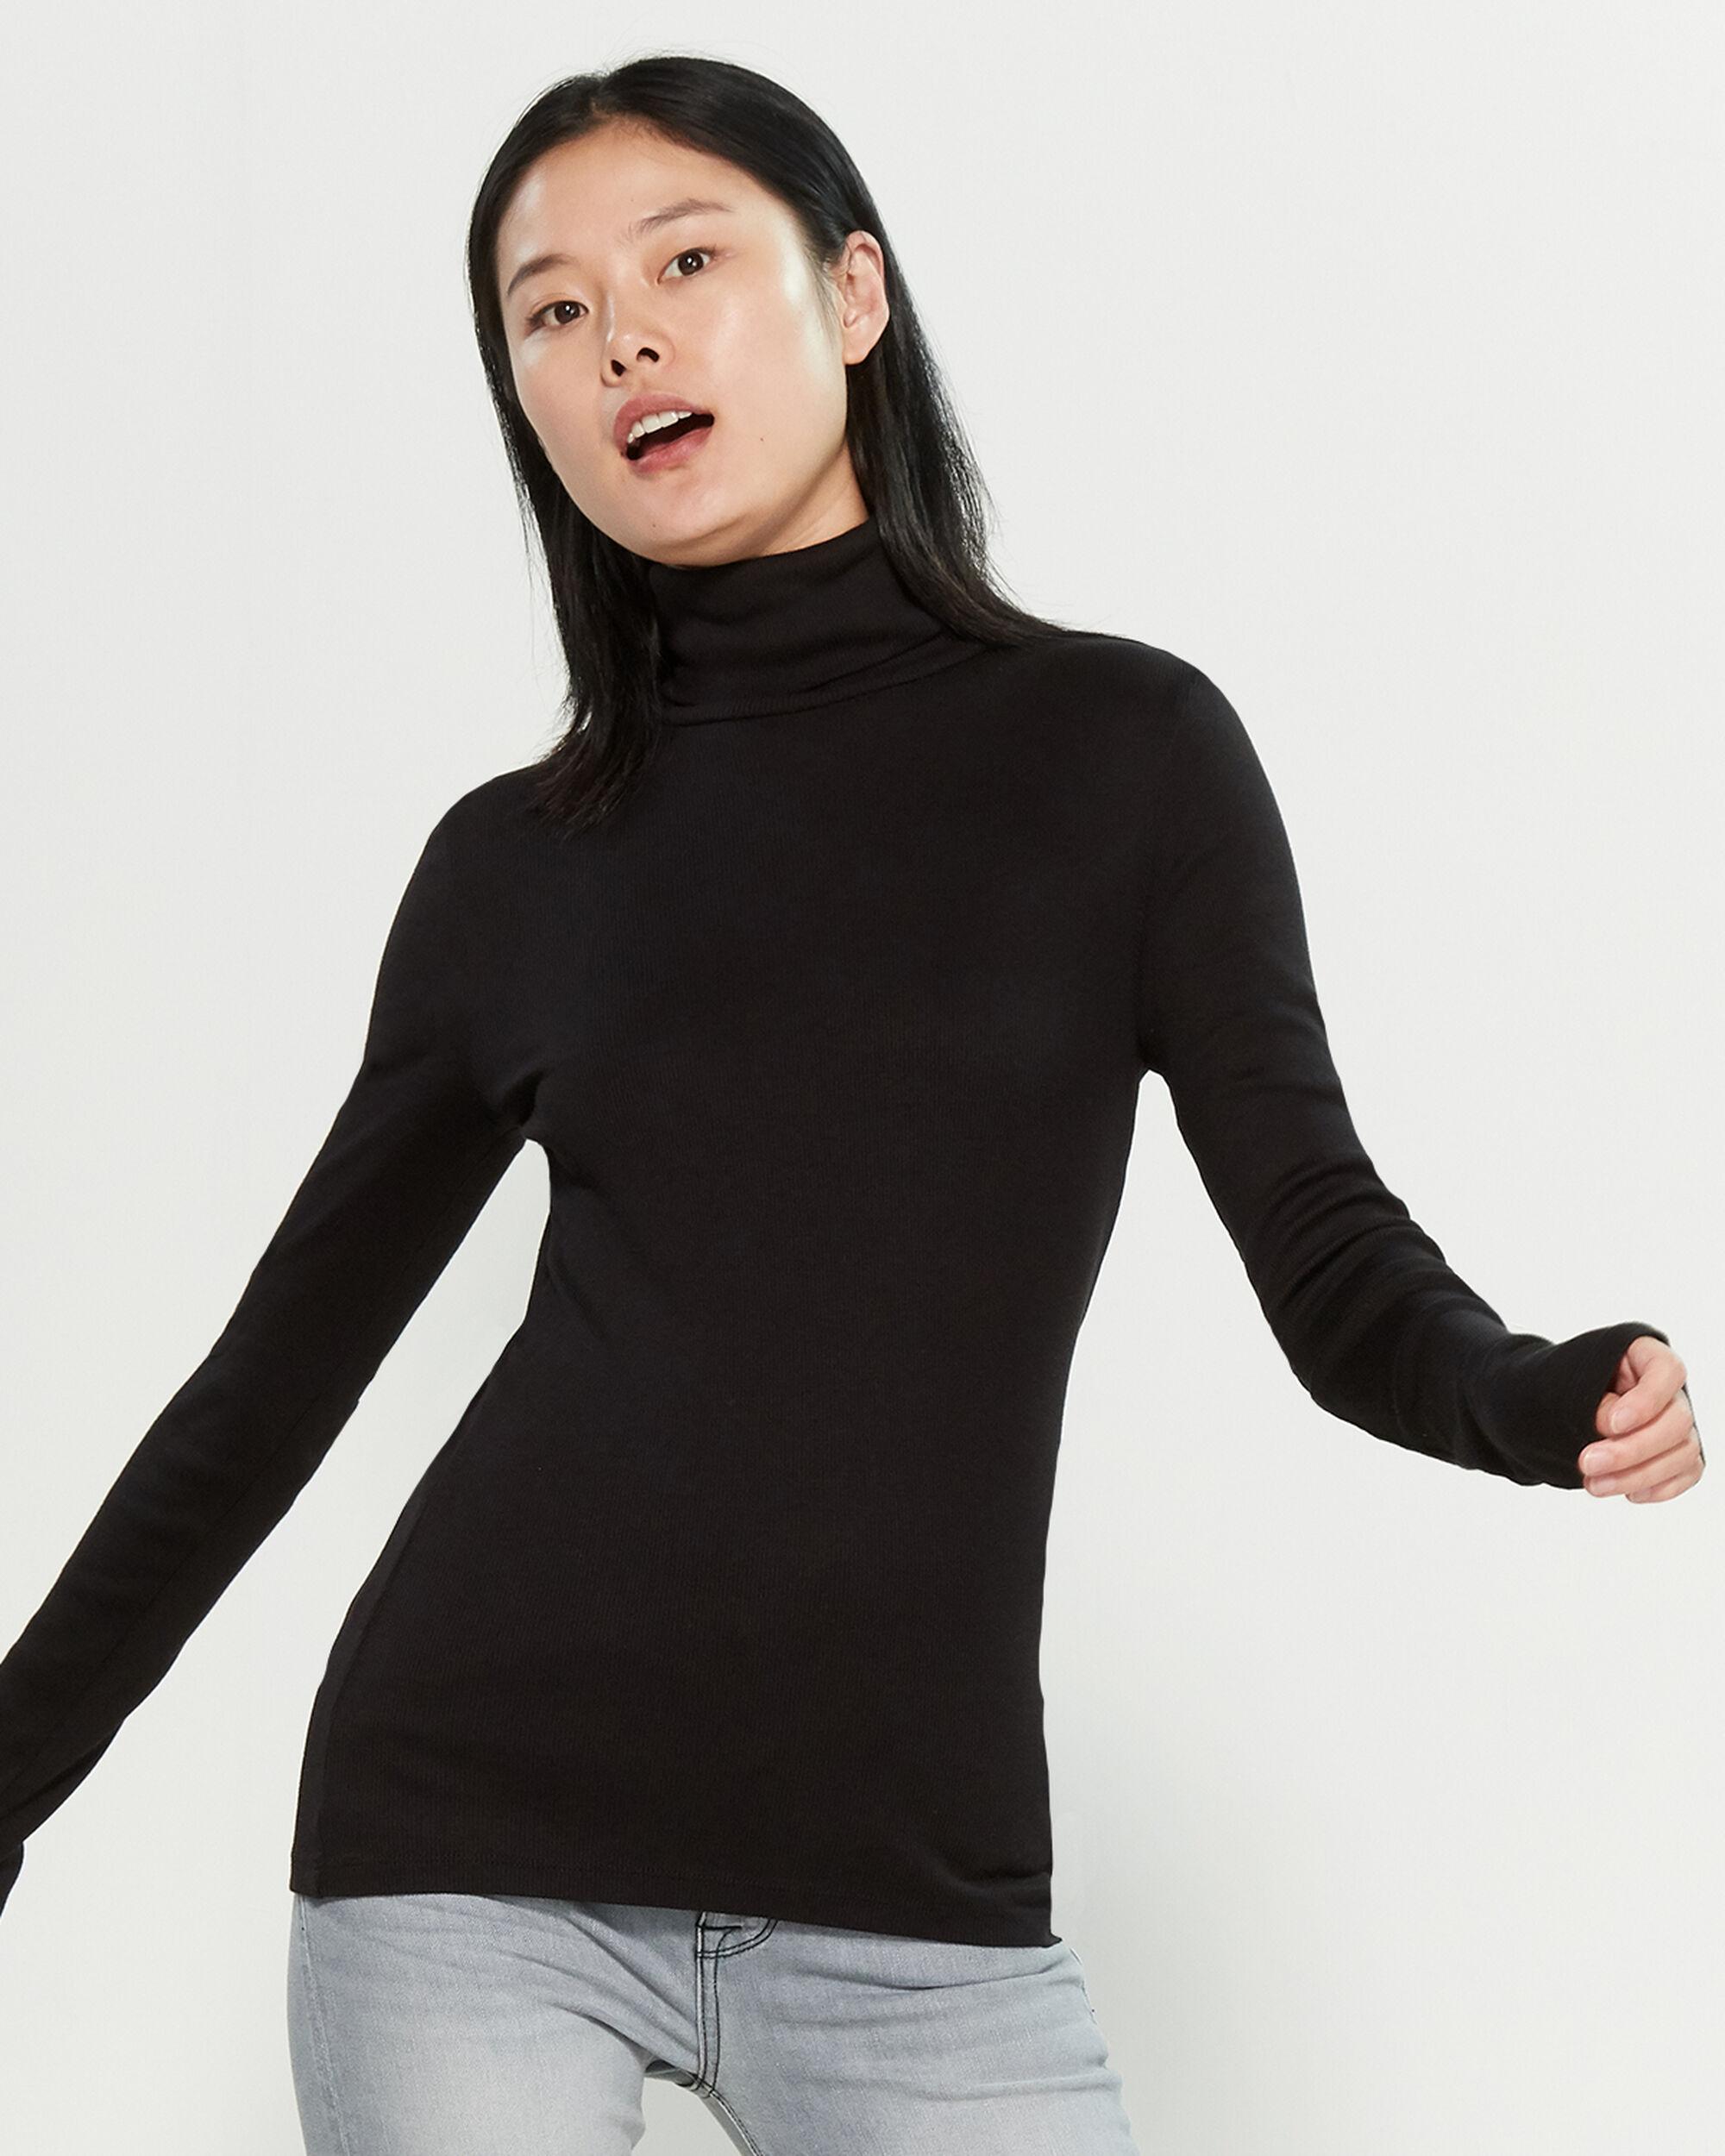 Splendid Cotton Black Fitted Turtleneck Sweater - Lyst